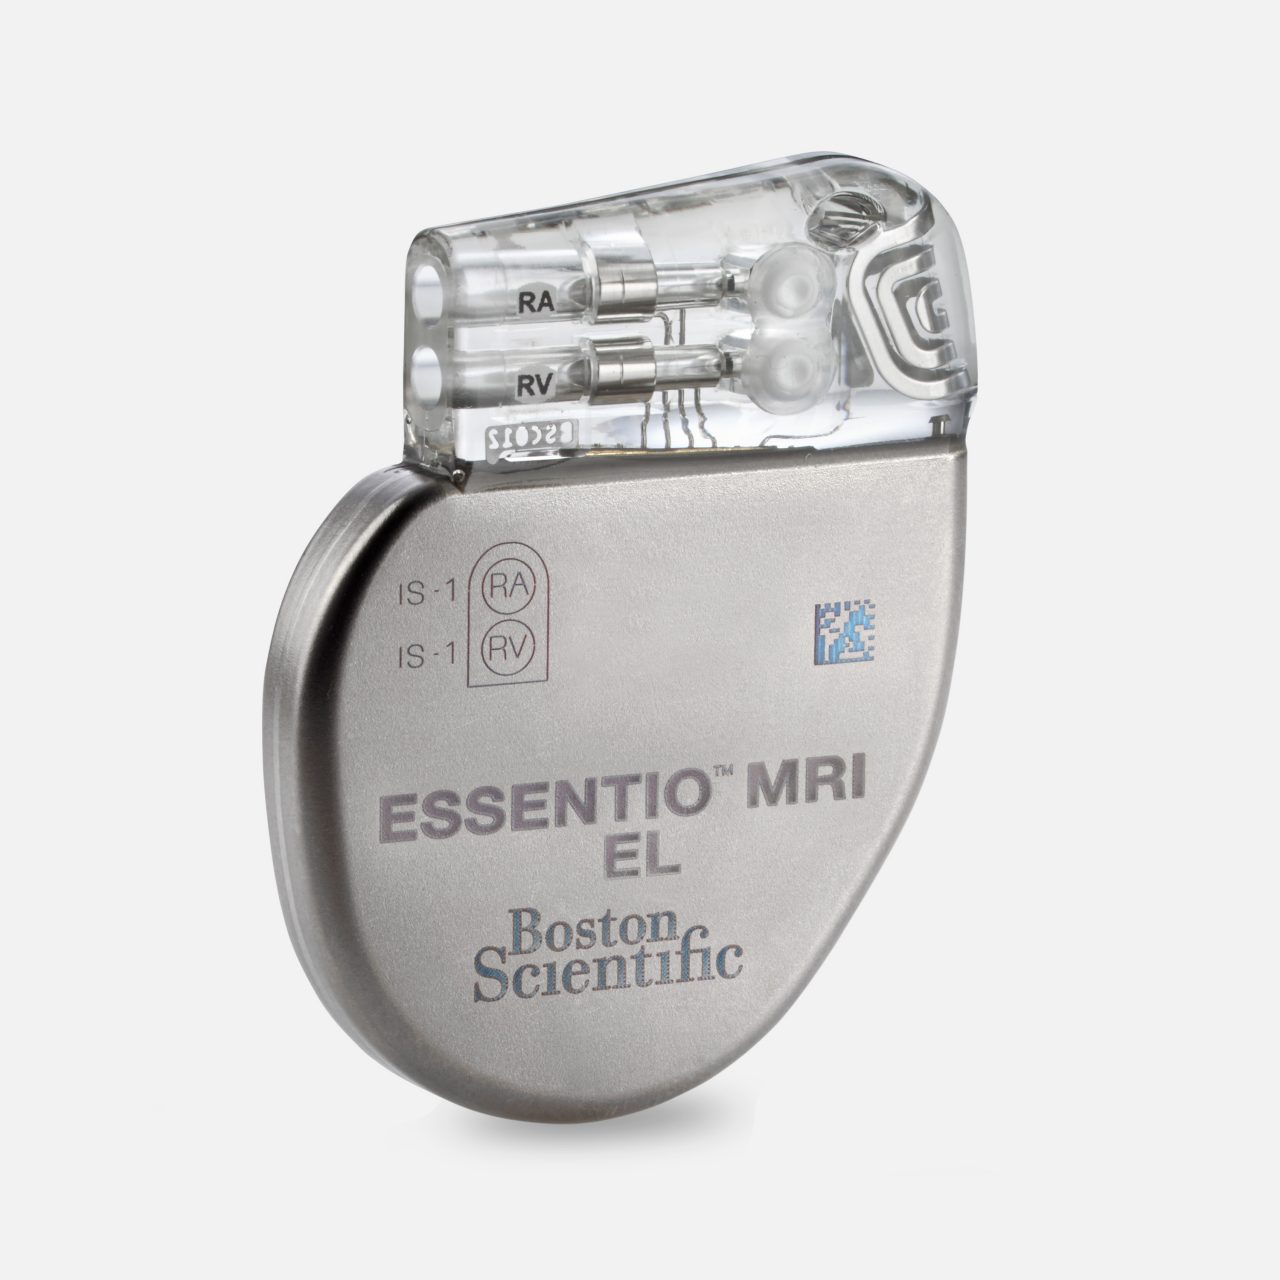 Boston Scientific’s ESSENTIO pacemaker